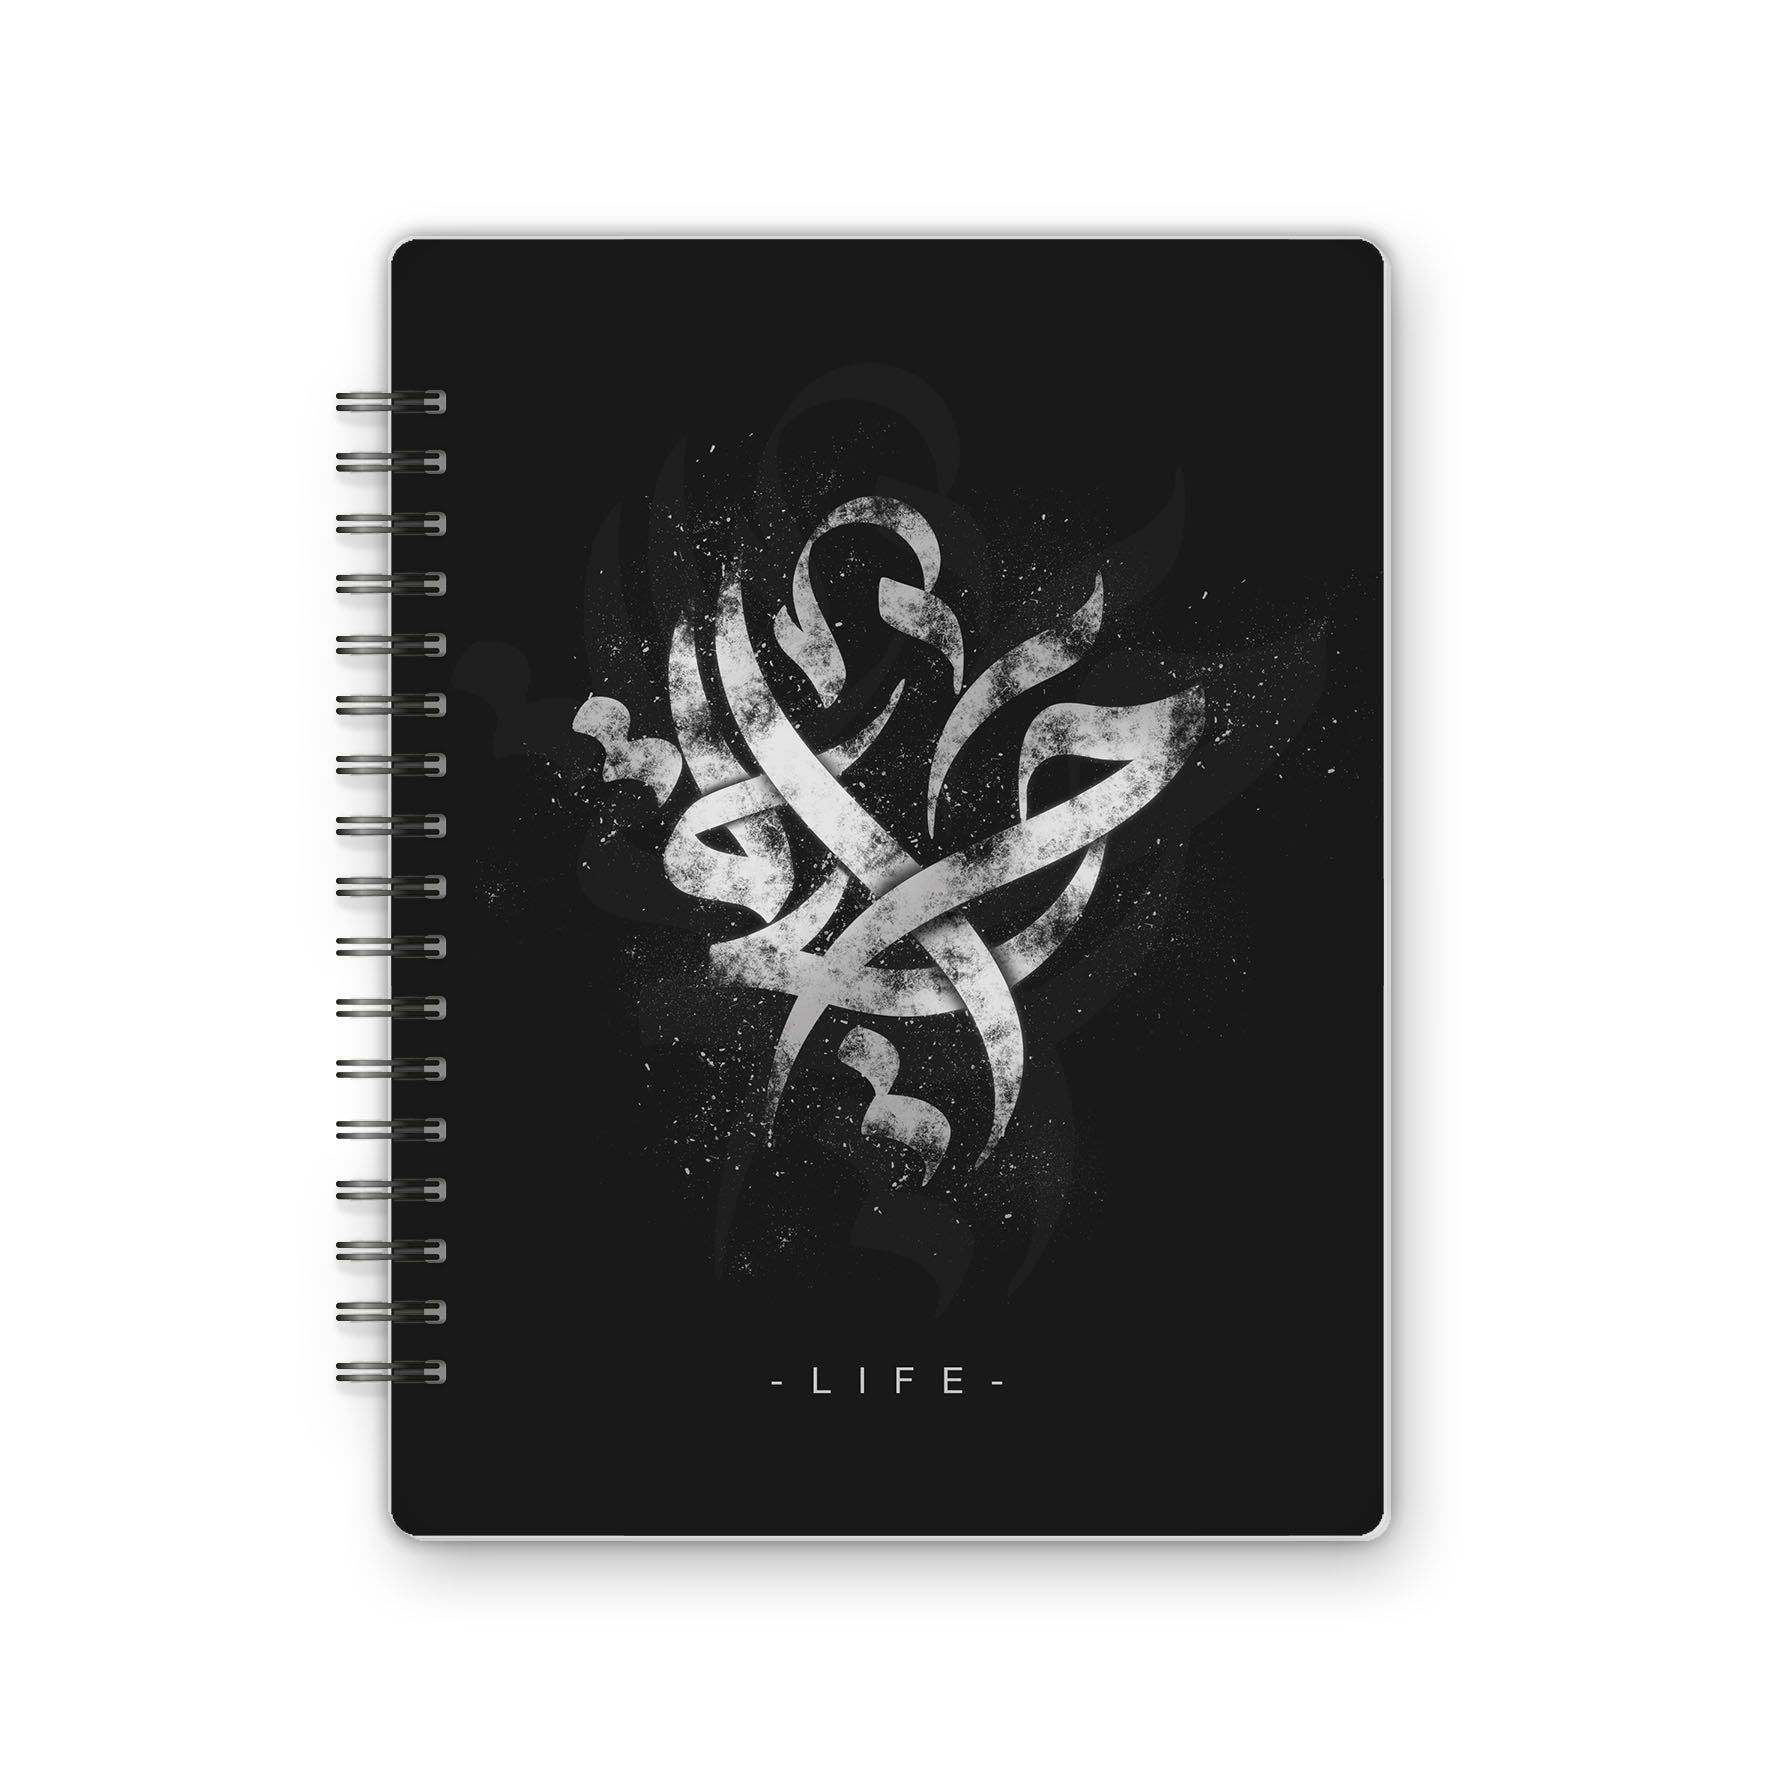 Arabic Calligraphy | Life - from Omar El-Melegi